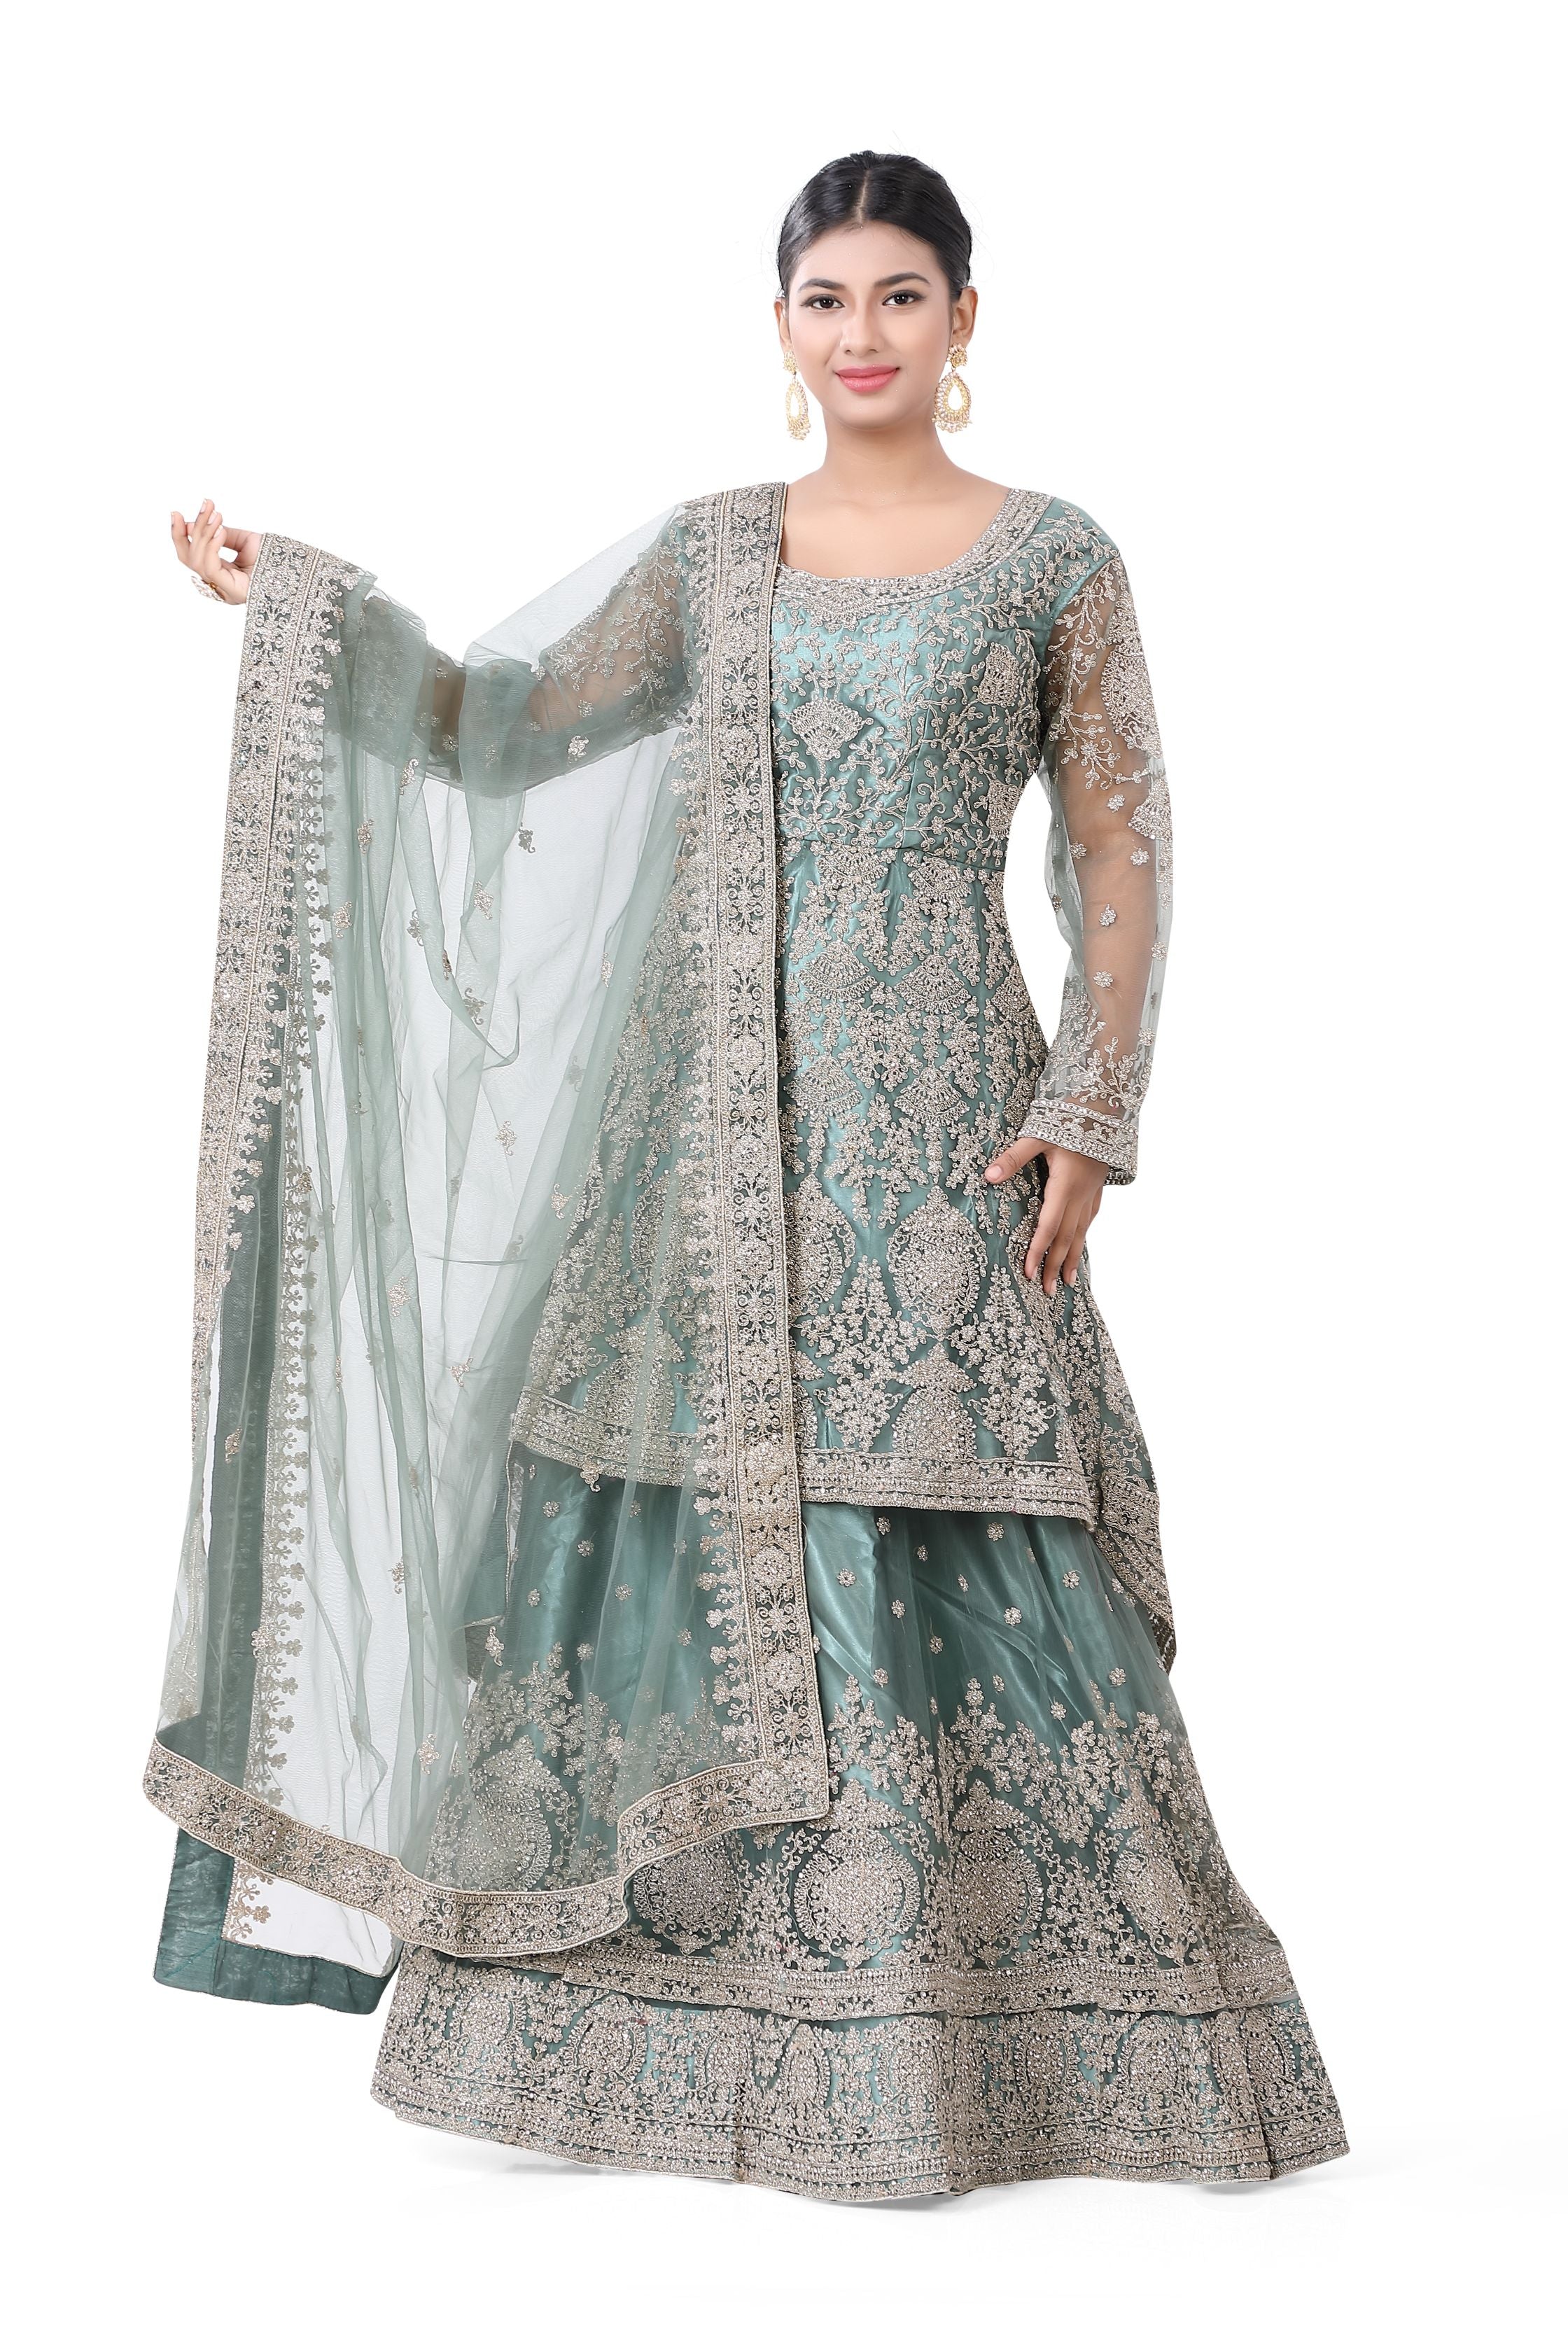 best arabic lacha collection in kerala | Bridal saree, Saree designs, Dress